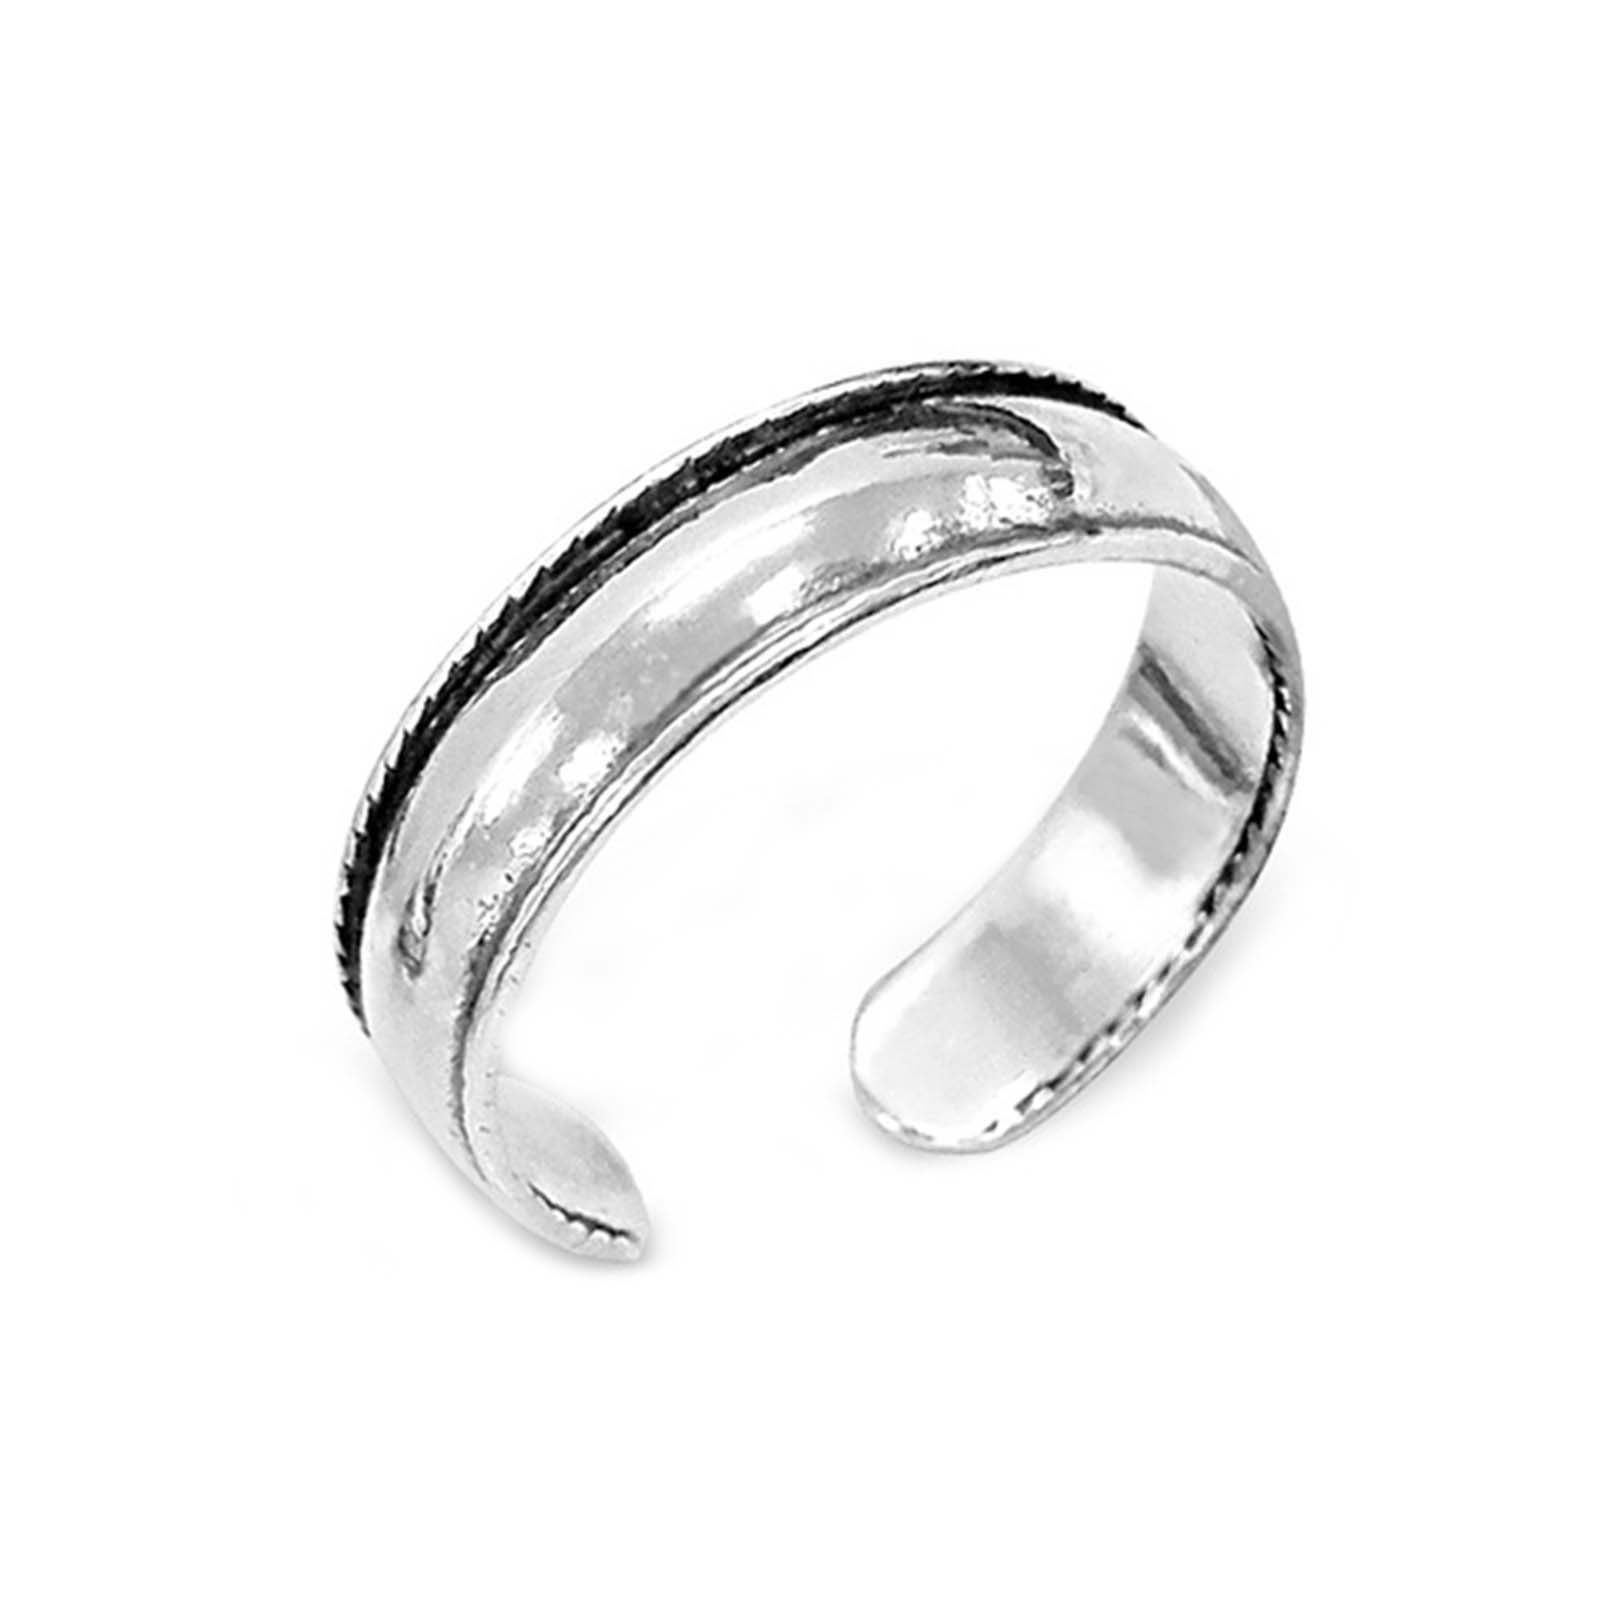 Kinder Teens (Gr. 128 - 182) schmuck23 Zehenring Zeh Ring schlicht 925 Silber breit, Zehring Fuss Ring Toering